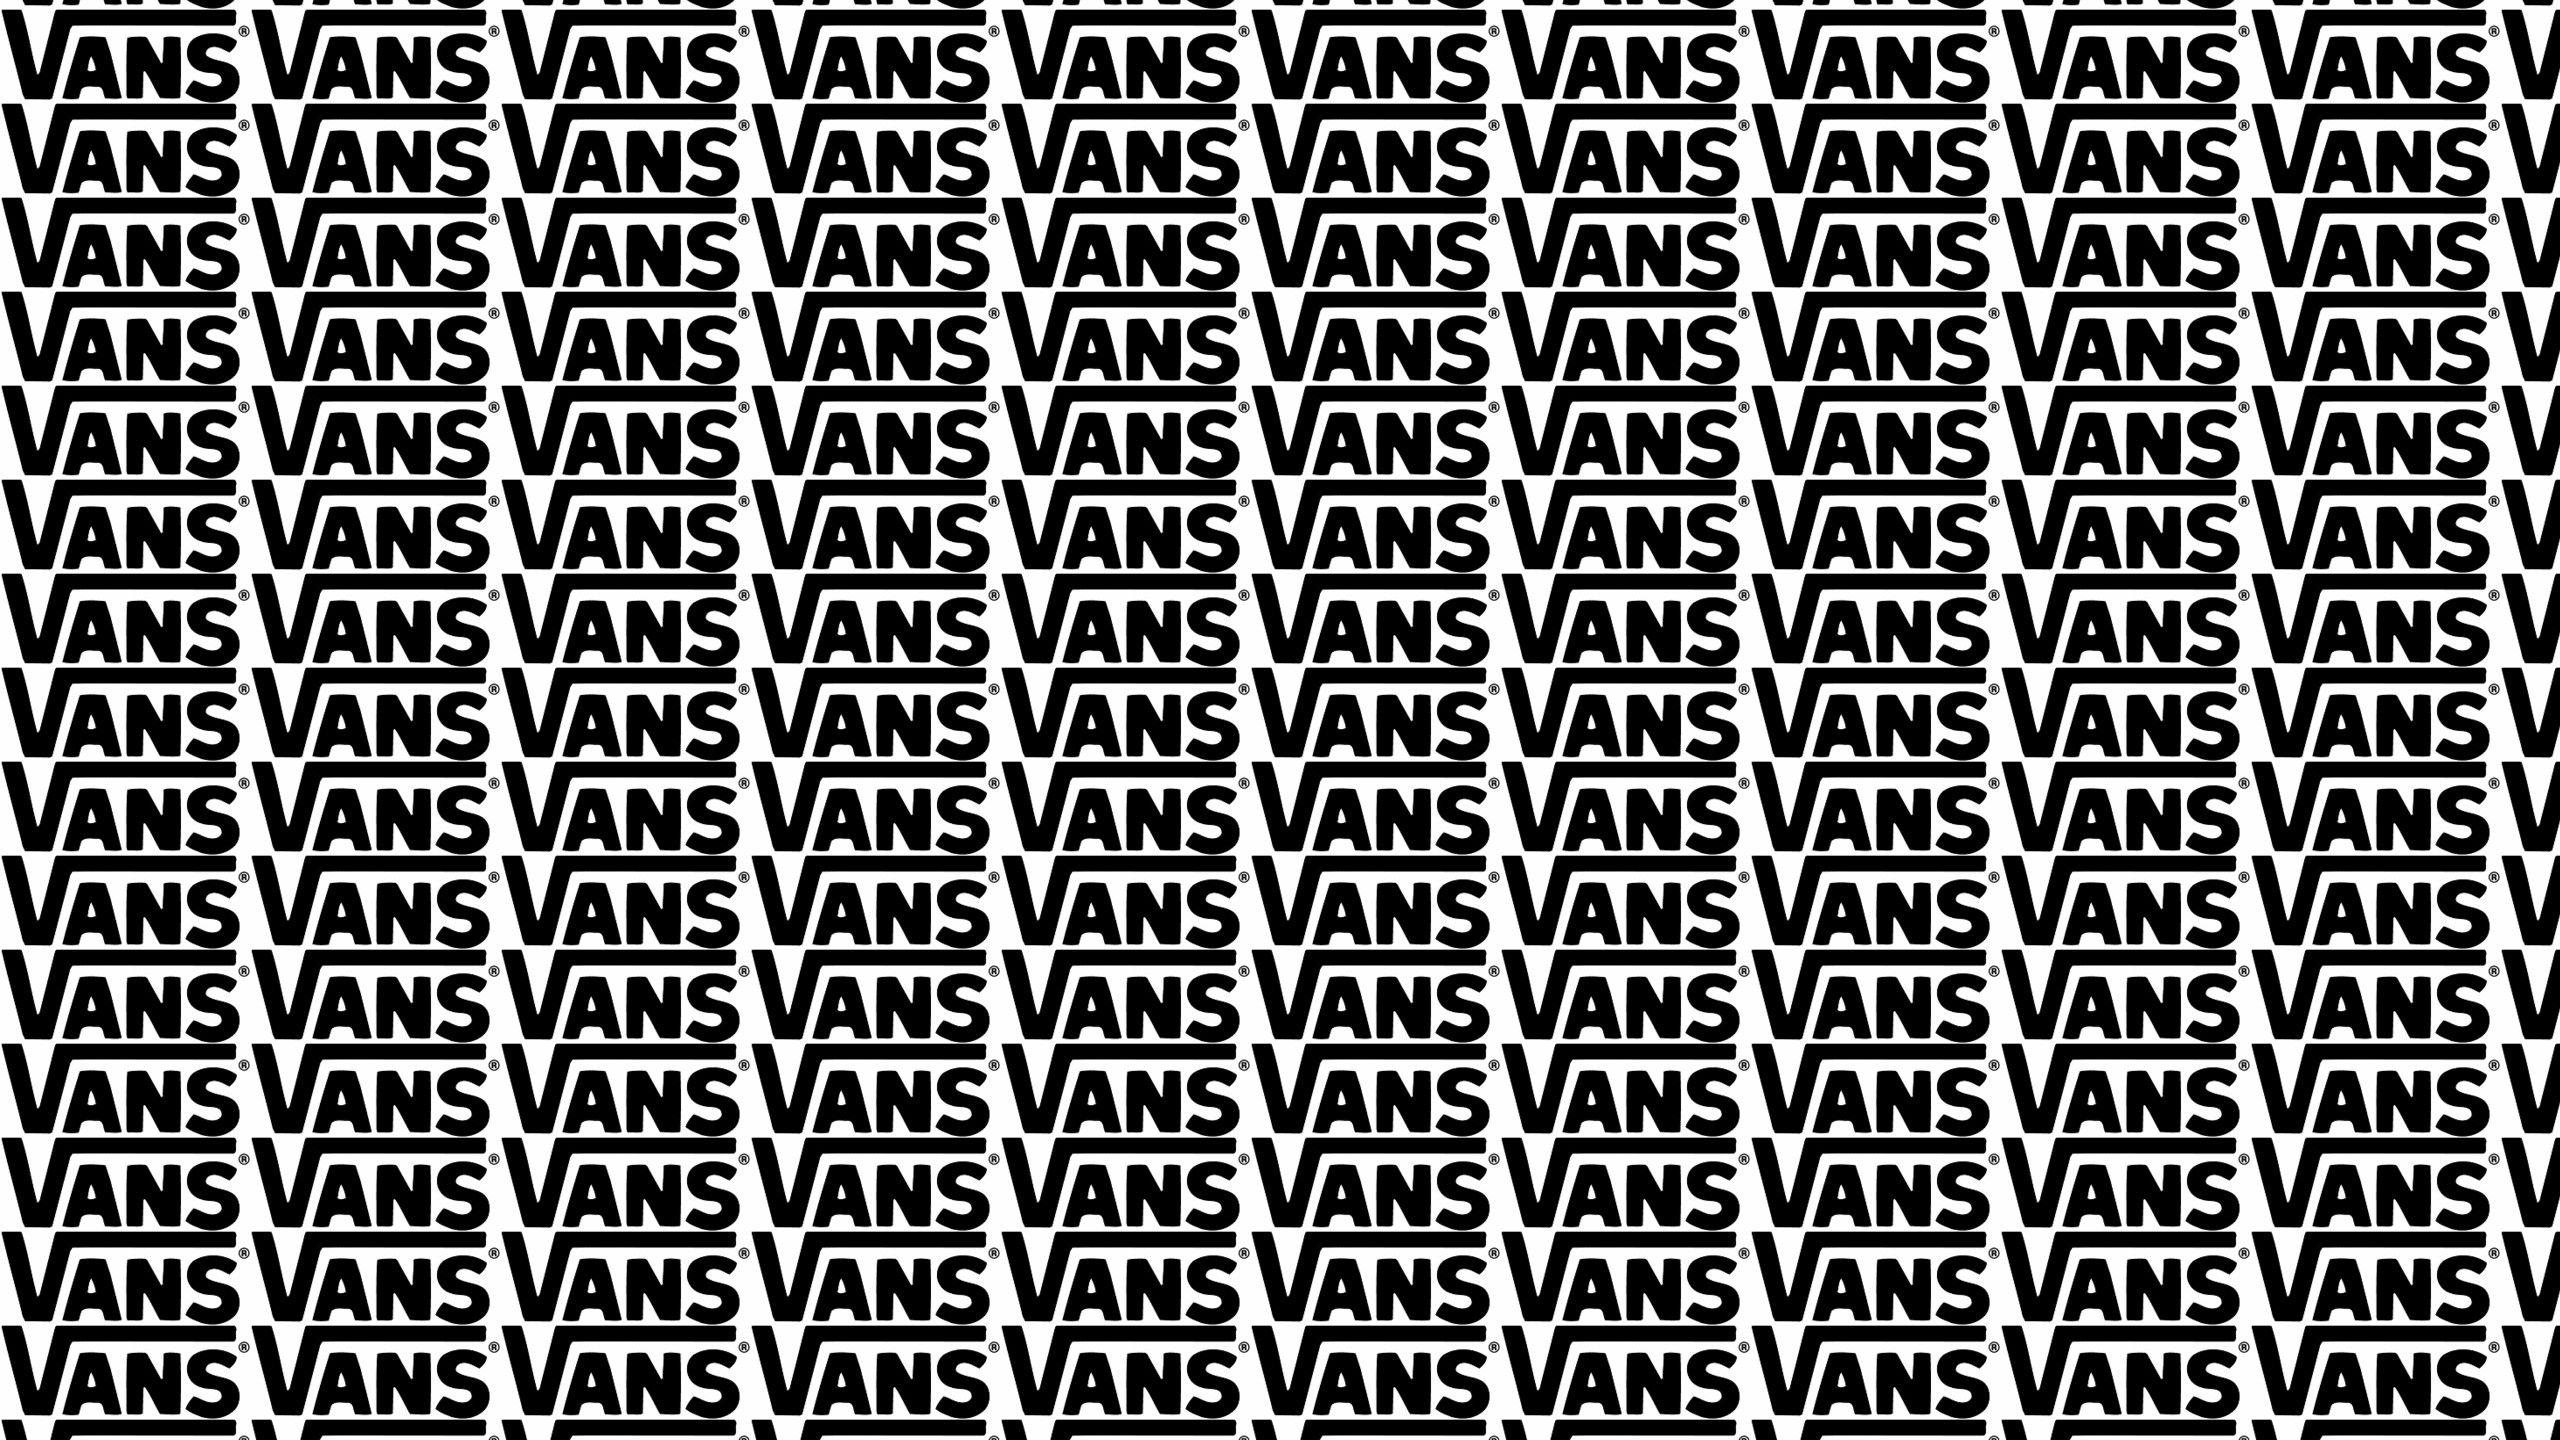 vans background, Vans Shoes Vans Shoes Online